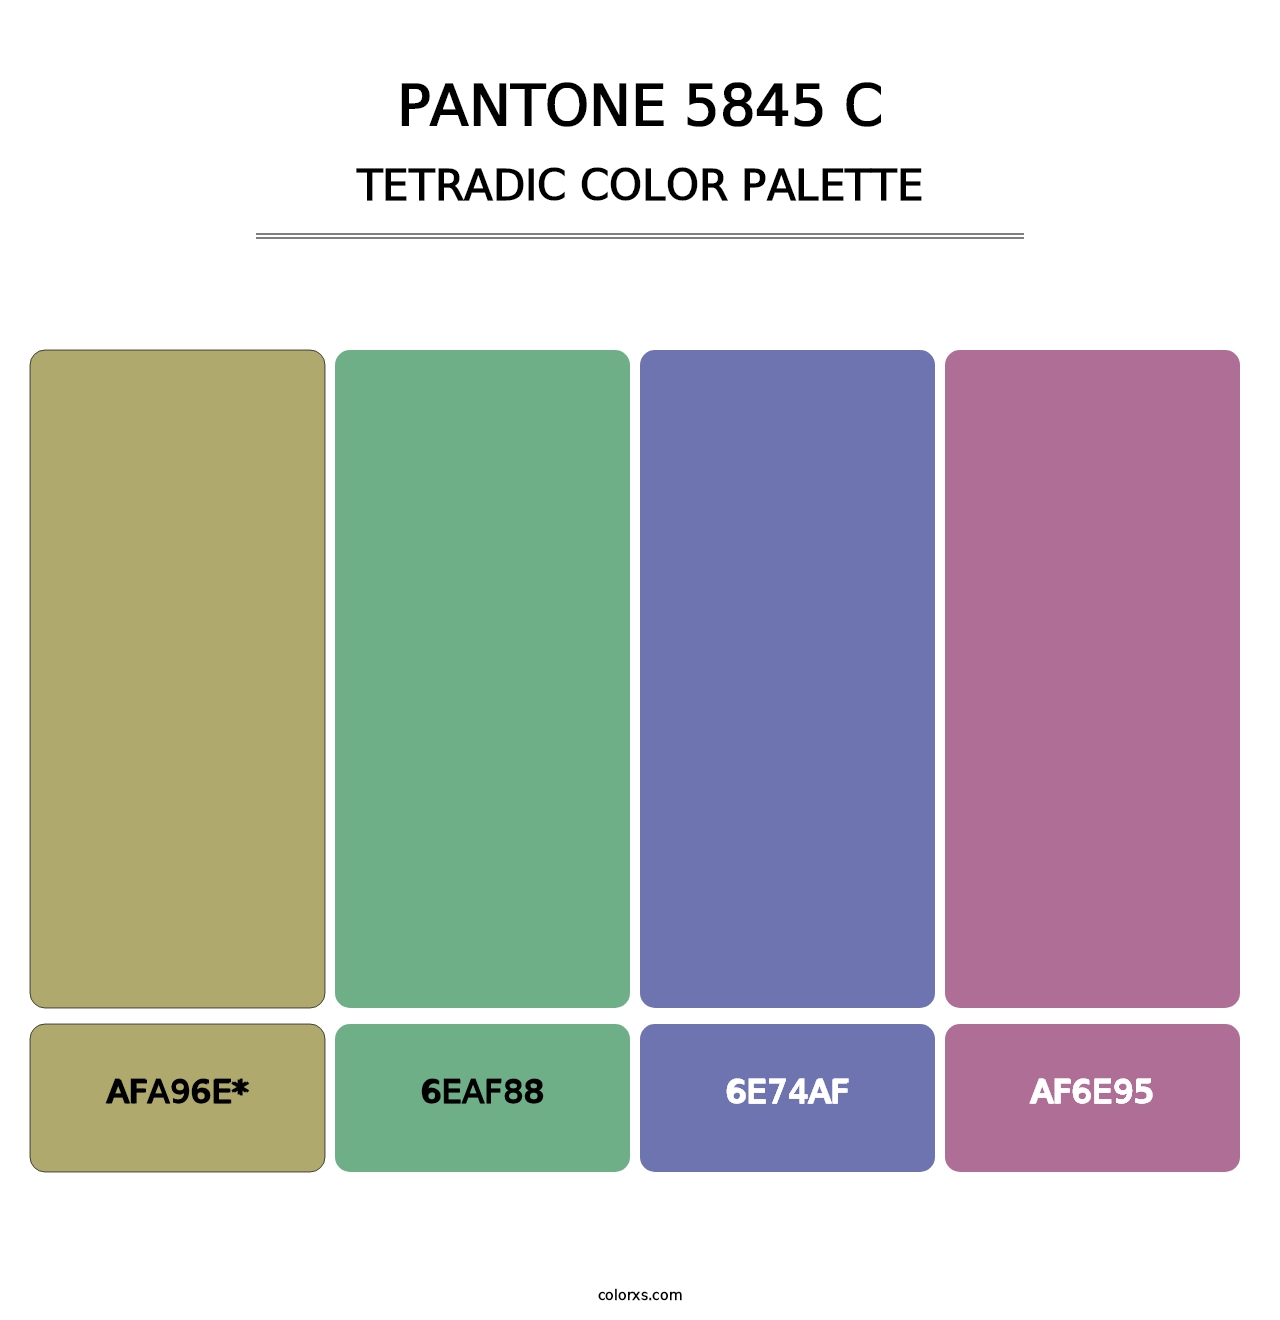 PANTONE 5845 C - Tetradic Color Palette